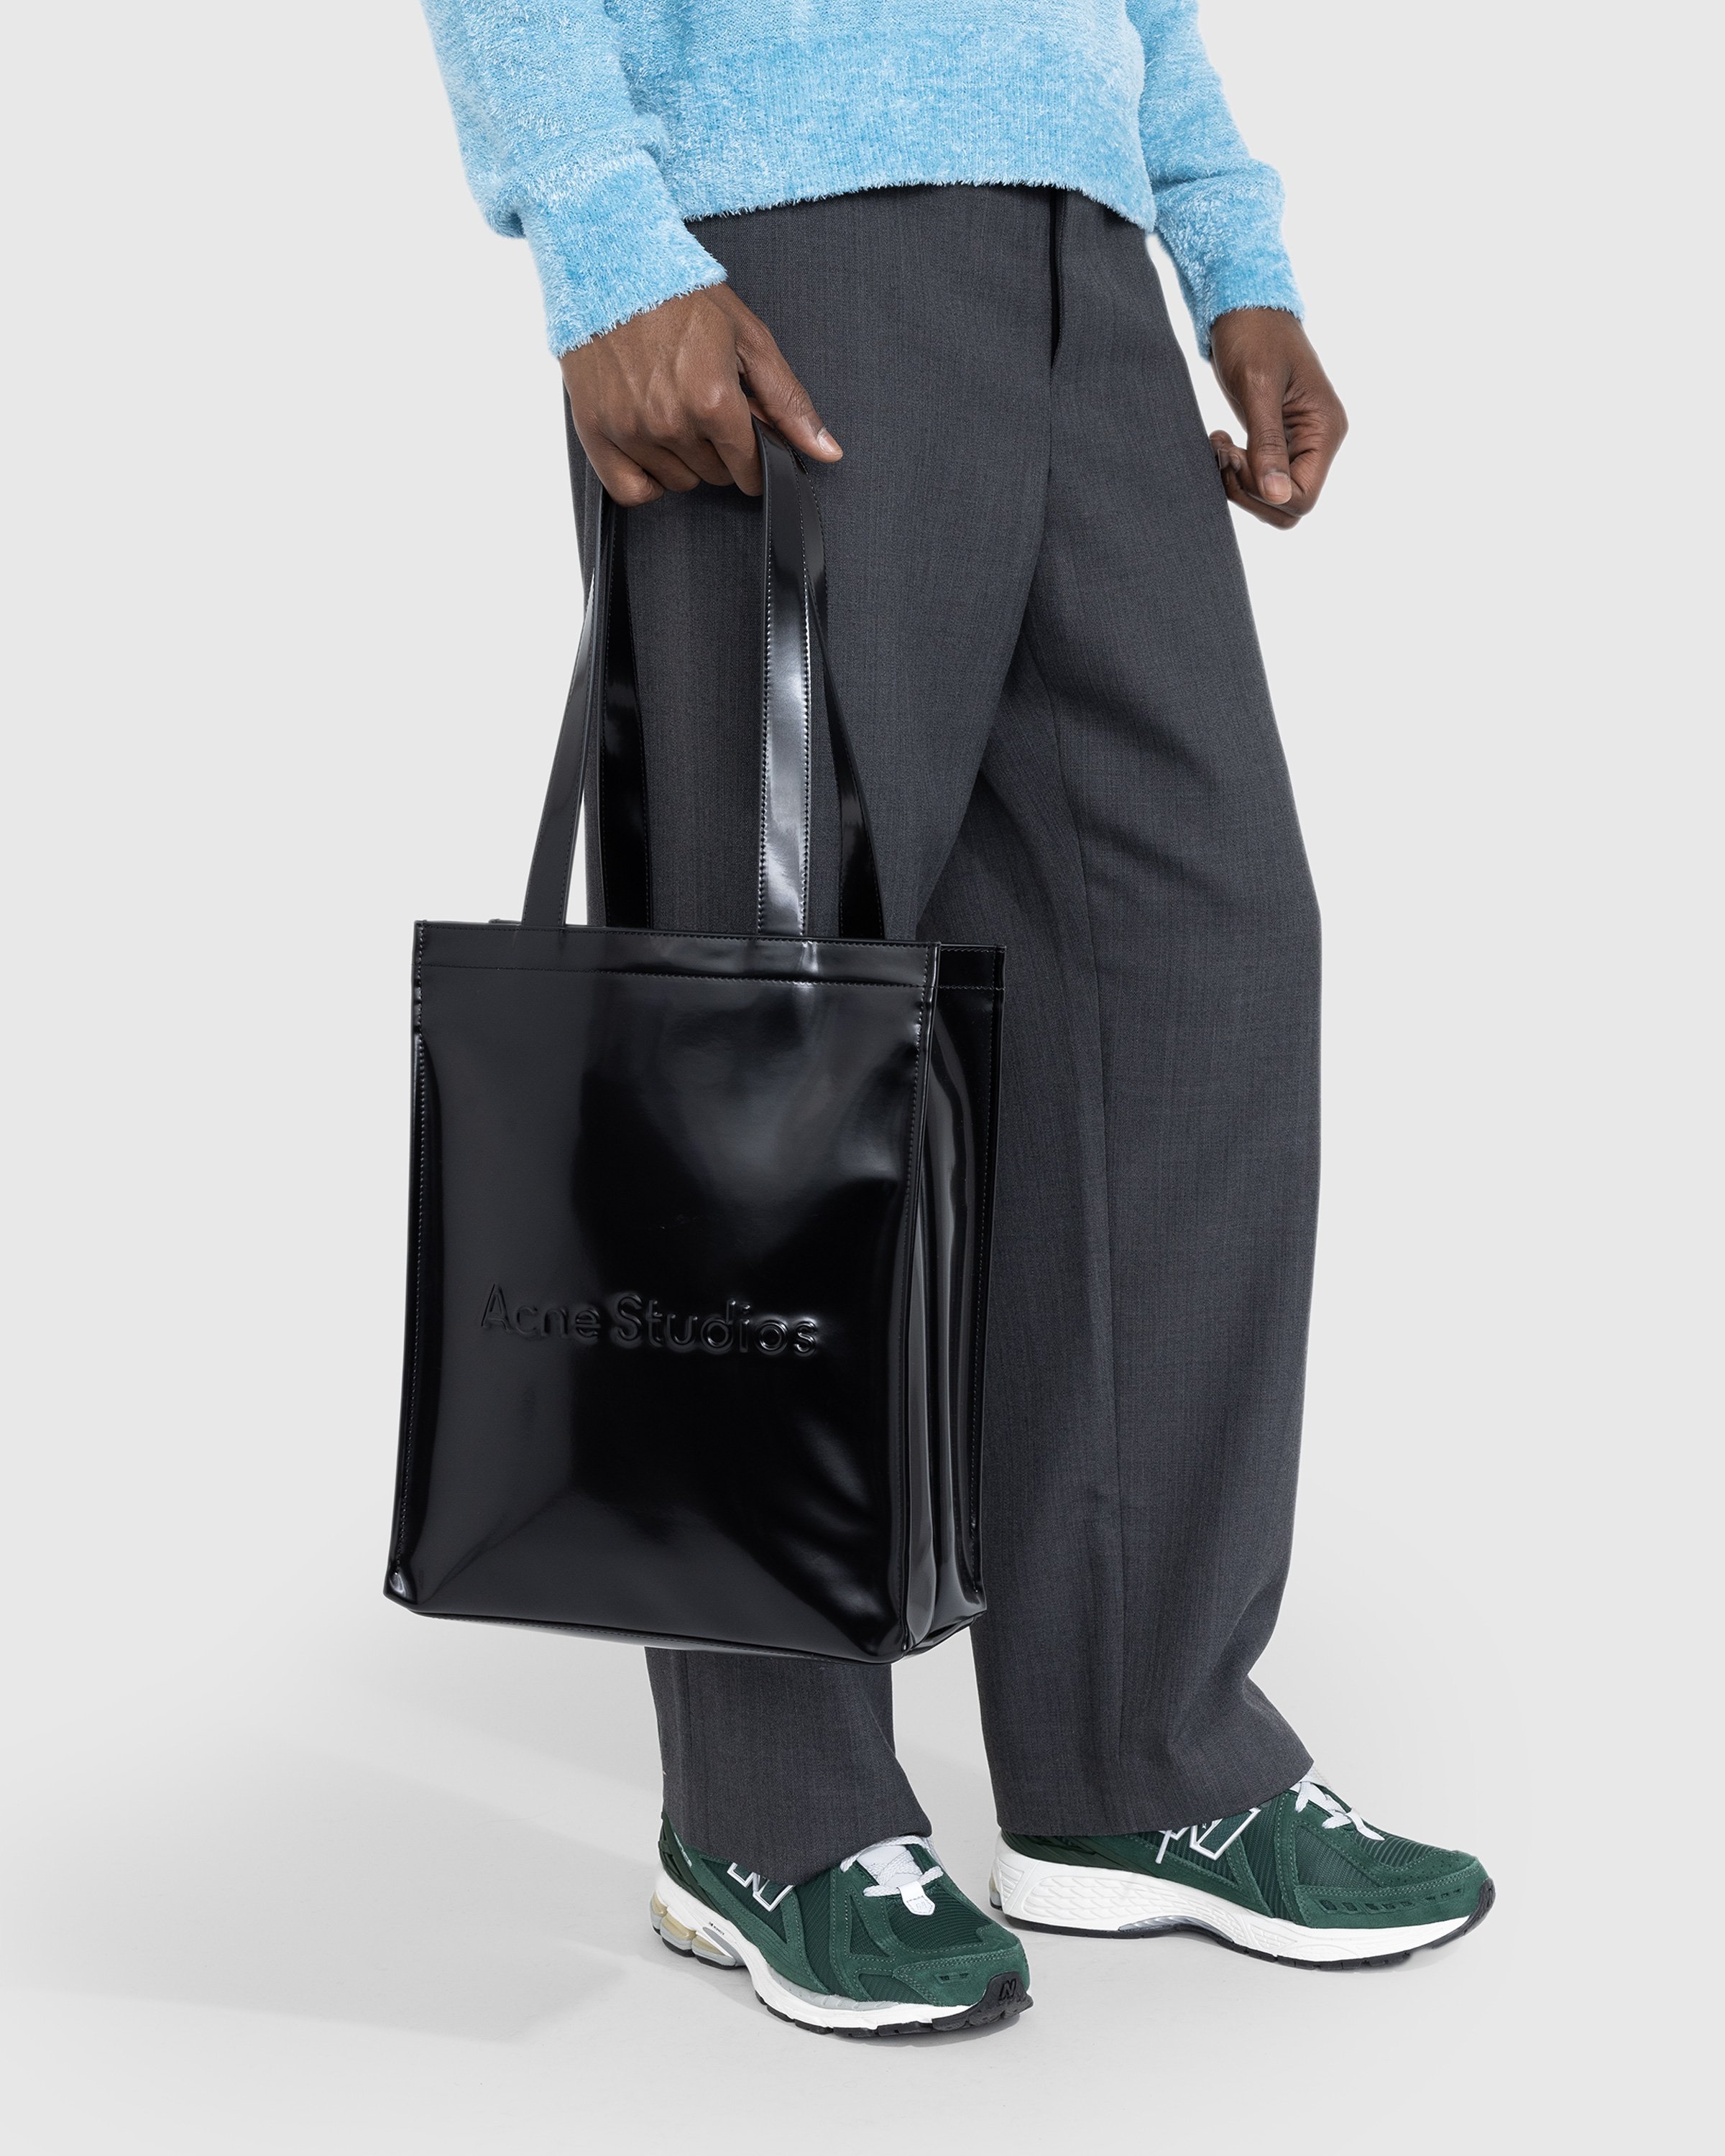 Acne Studios - Logo Shoulder Tote Bag Black - Accessories - Black - Image 5